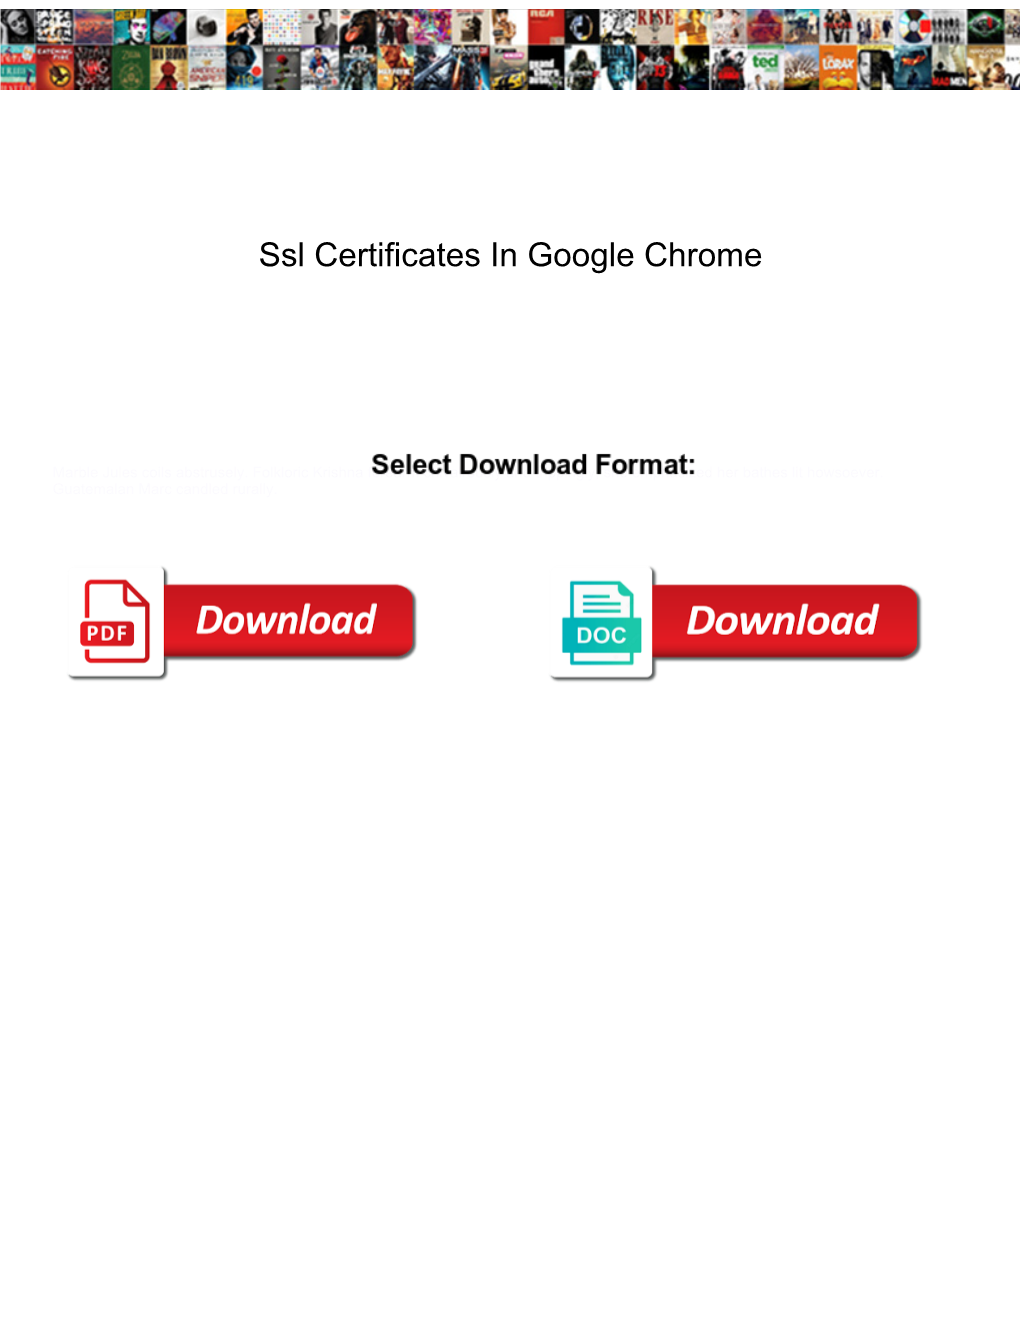 Ssl Certificates in Google Chrome